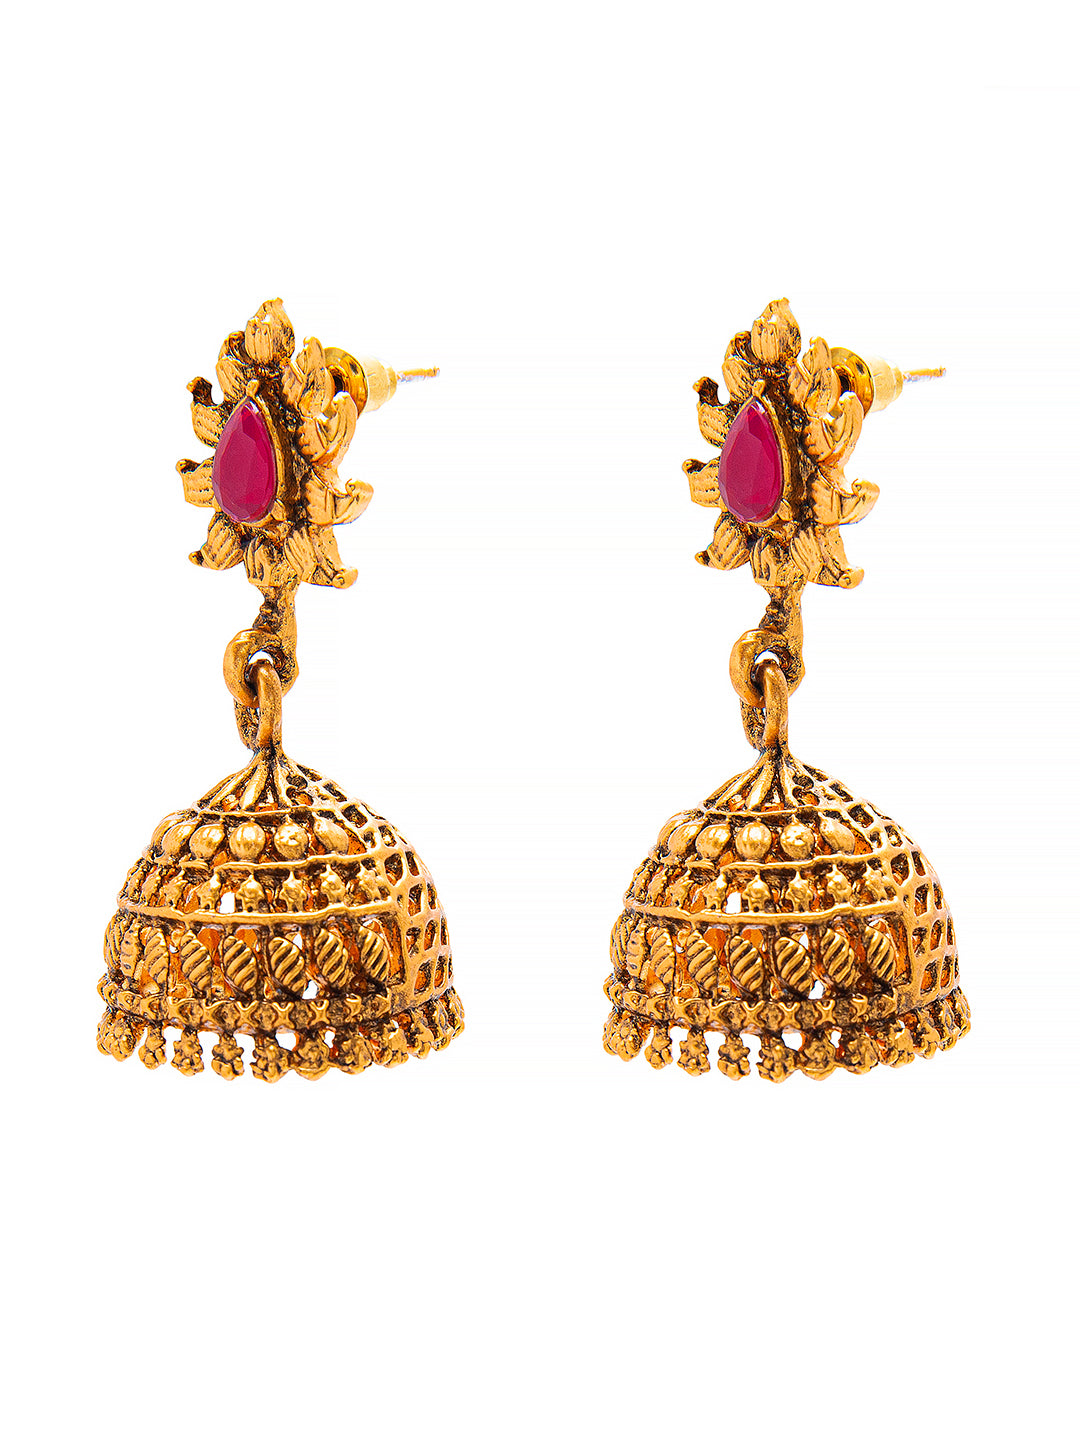 Antique Gold Jhumka /earrings Temple Jewelry / Dangle Drop Gold Jhumkas  /indian Wedding/kundan Jhumka/ Bridesmaid Earrings - Etsy